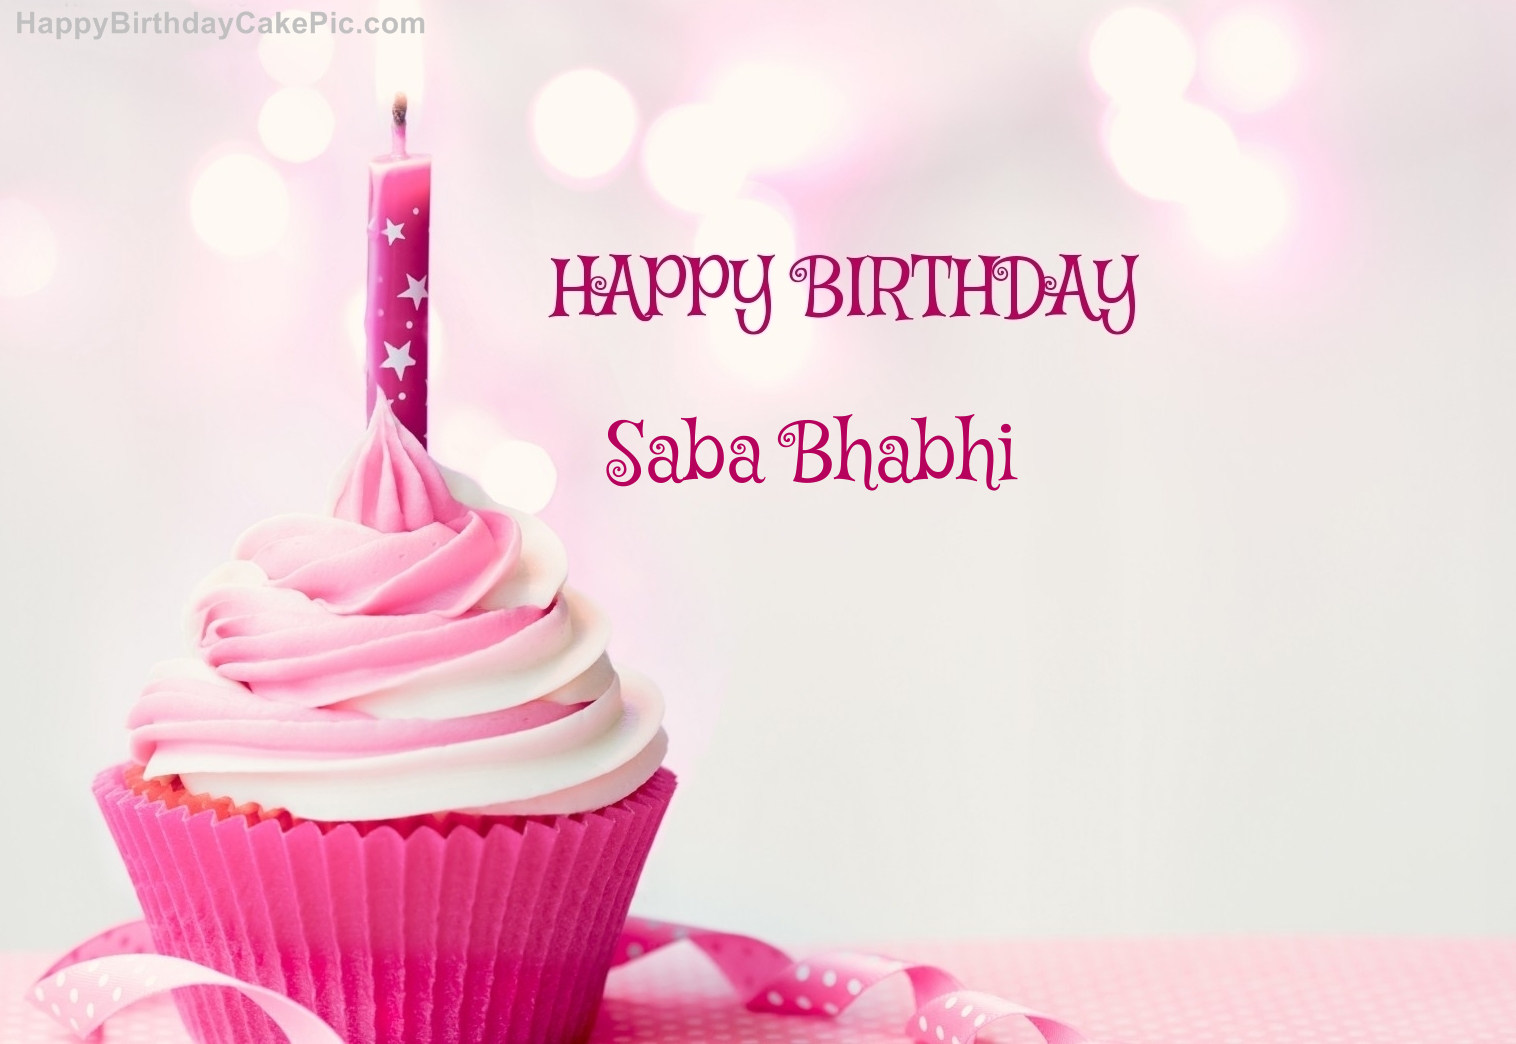 ️ Happy Birthday Cupcake Candle Pink Cake For Saba Bhabhi